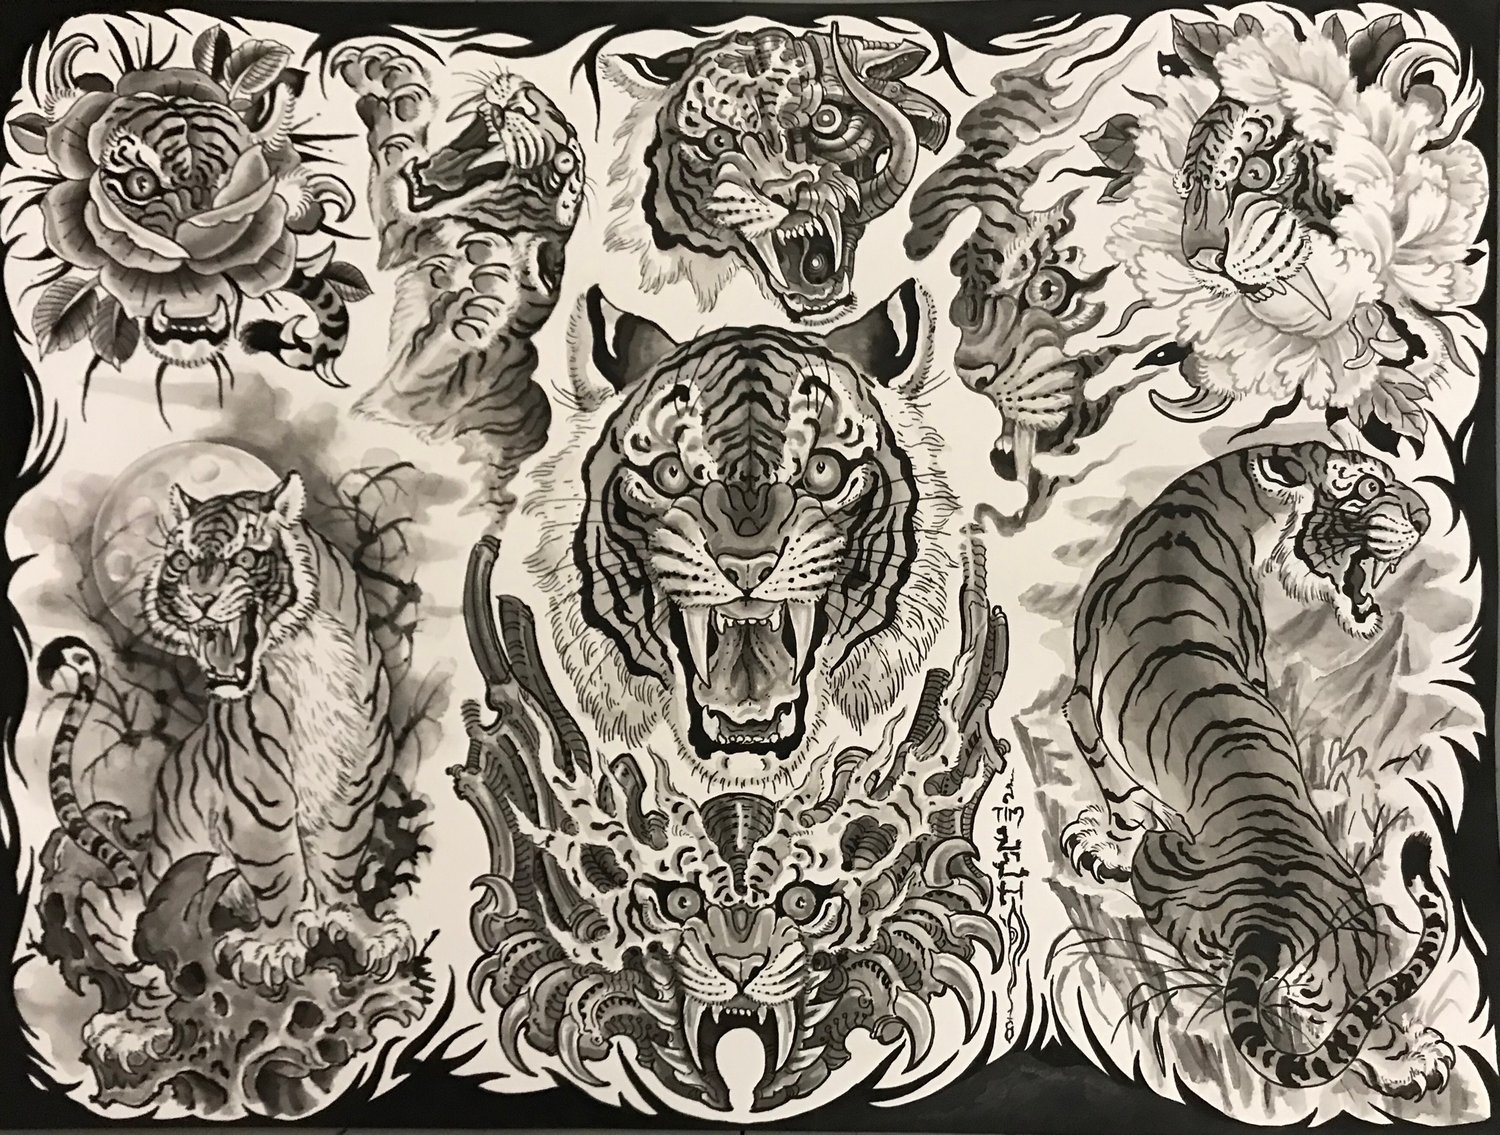 Image of Tim Lehi “Black and Grey Tiger” Poster